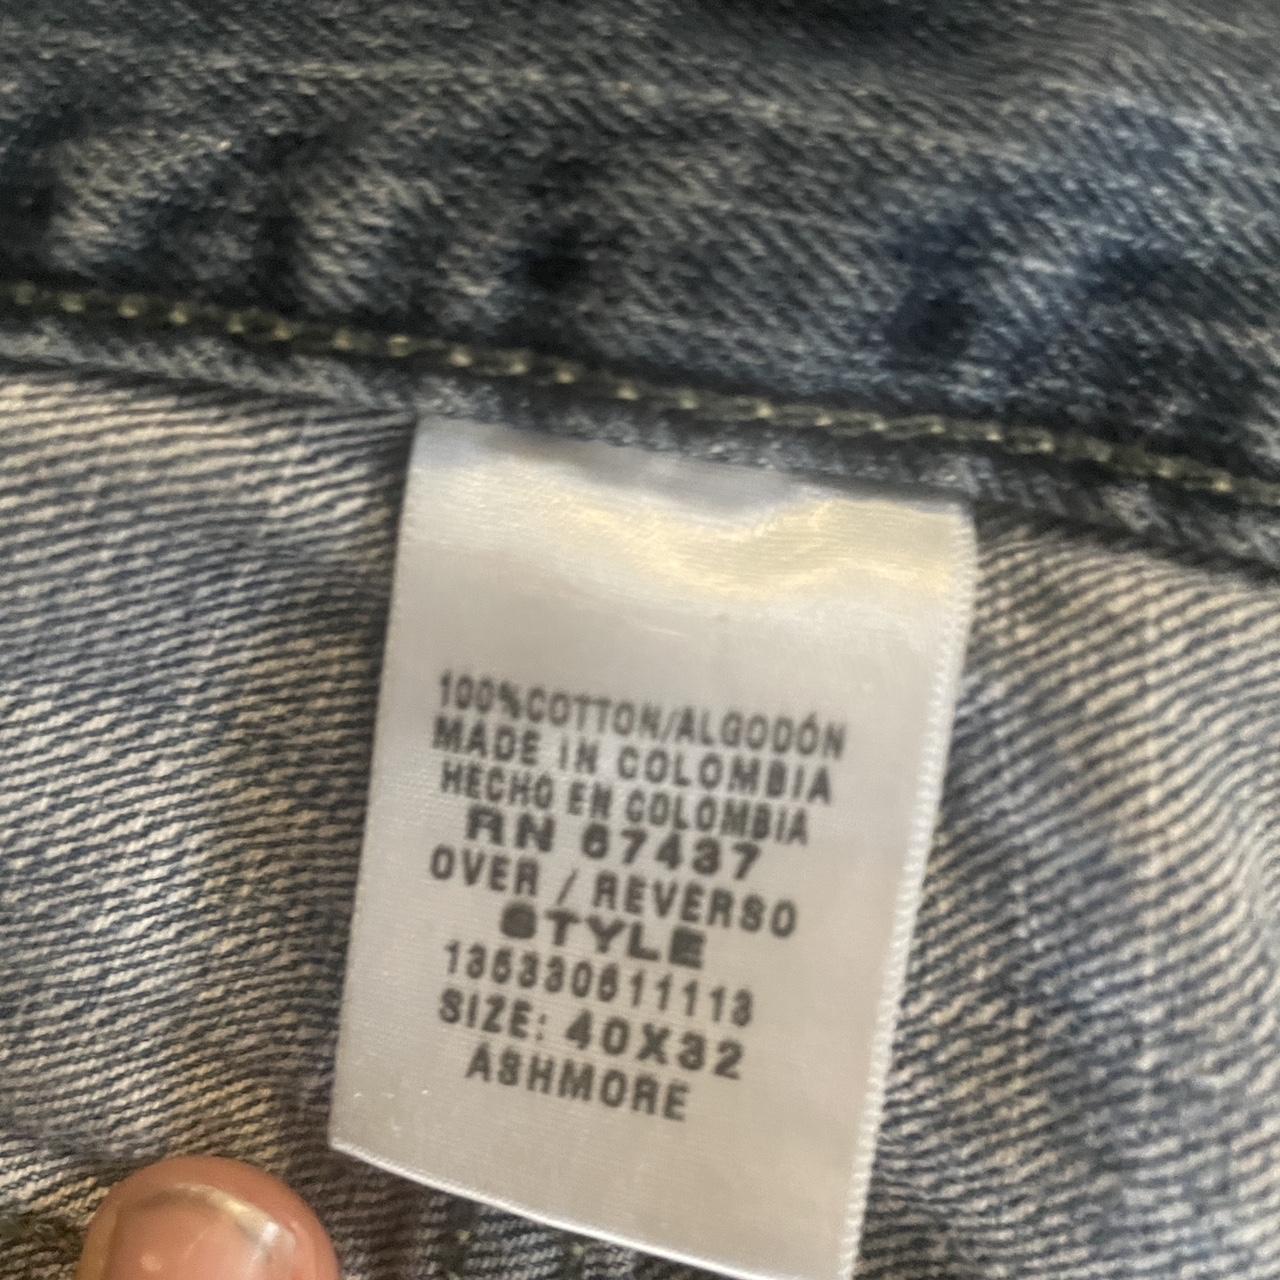 Very baggy Ralph Lauren jeans Size - 42 x 32 Flaws... - Depop